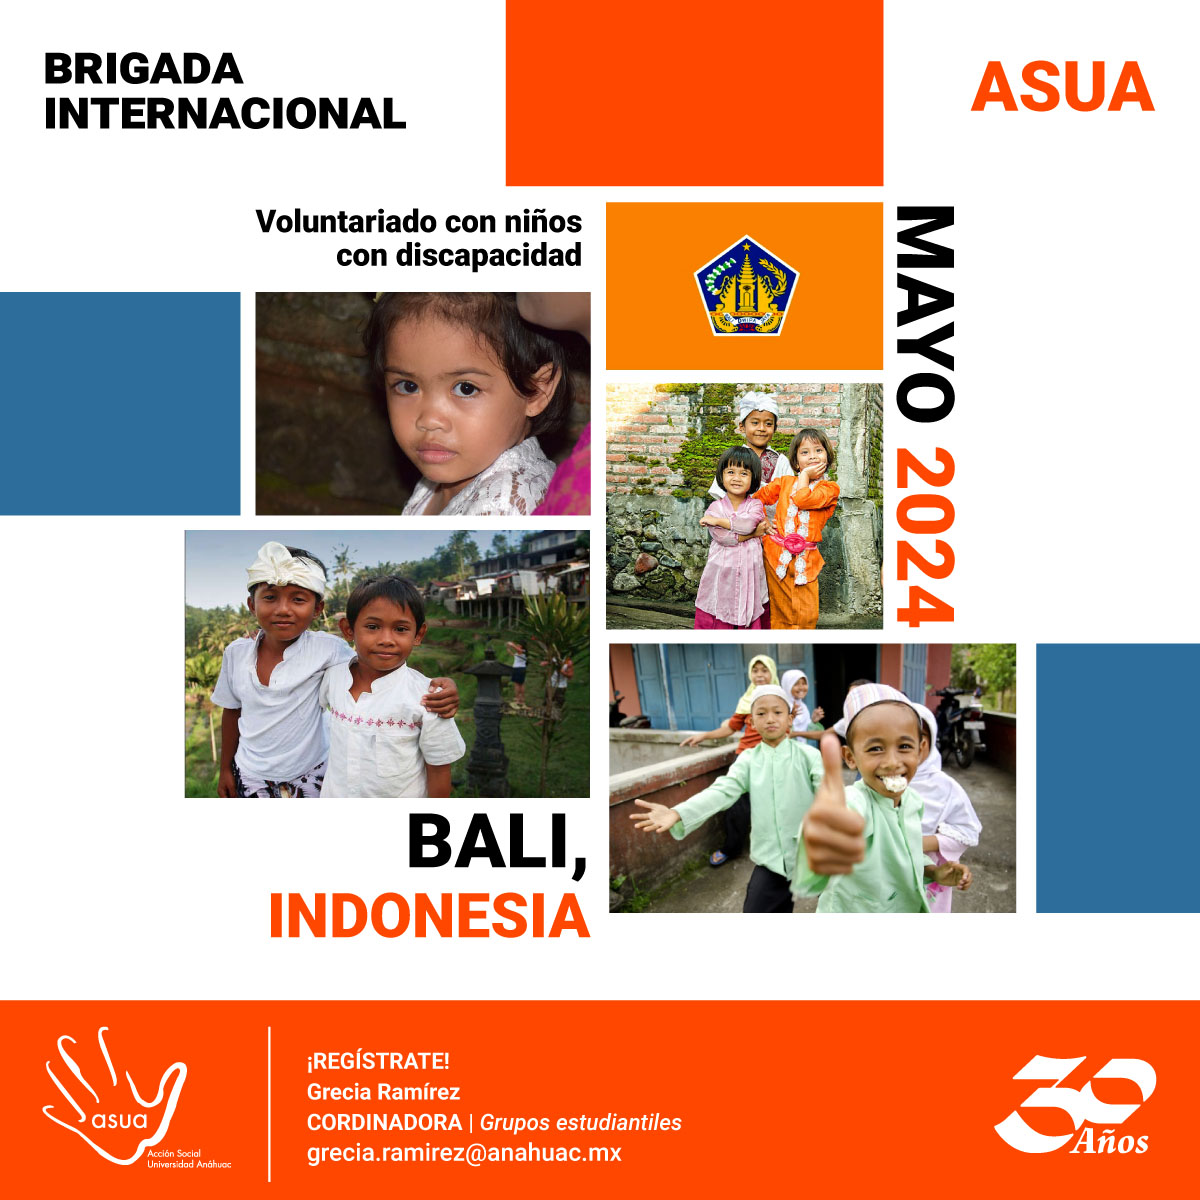 Brigada Internacional ASUA: Bali, Indonesia